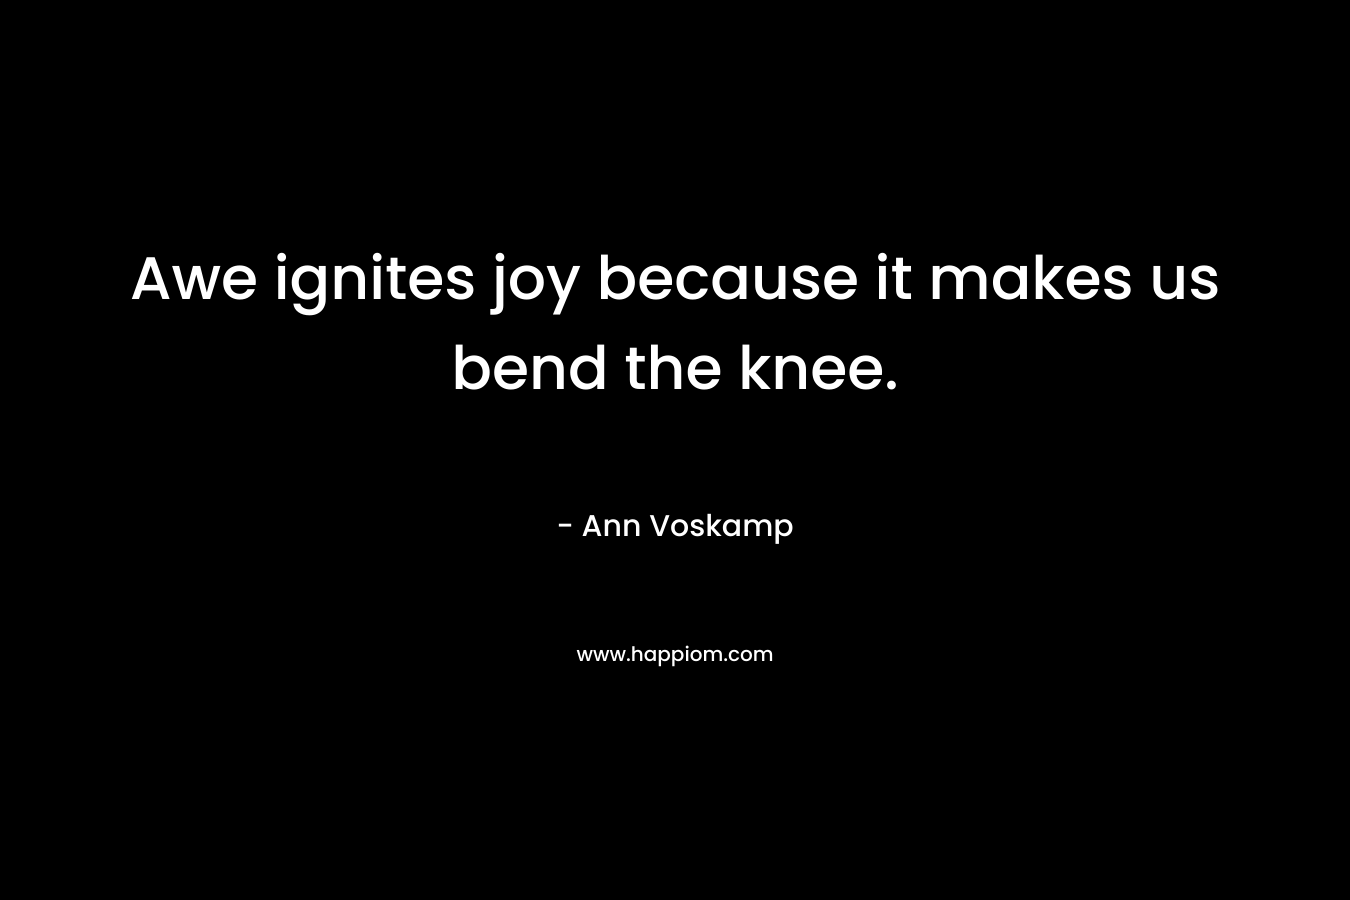 Awe ignites joy because it makes us bend the knee.